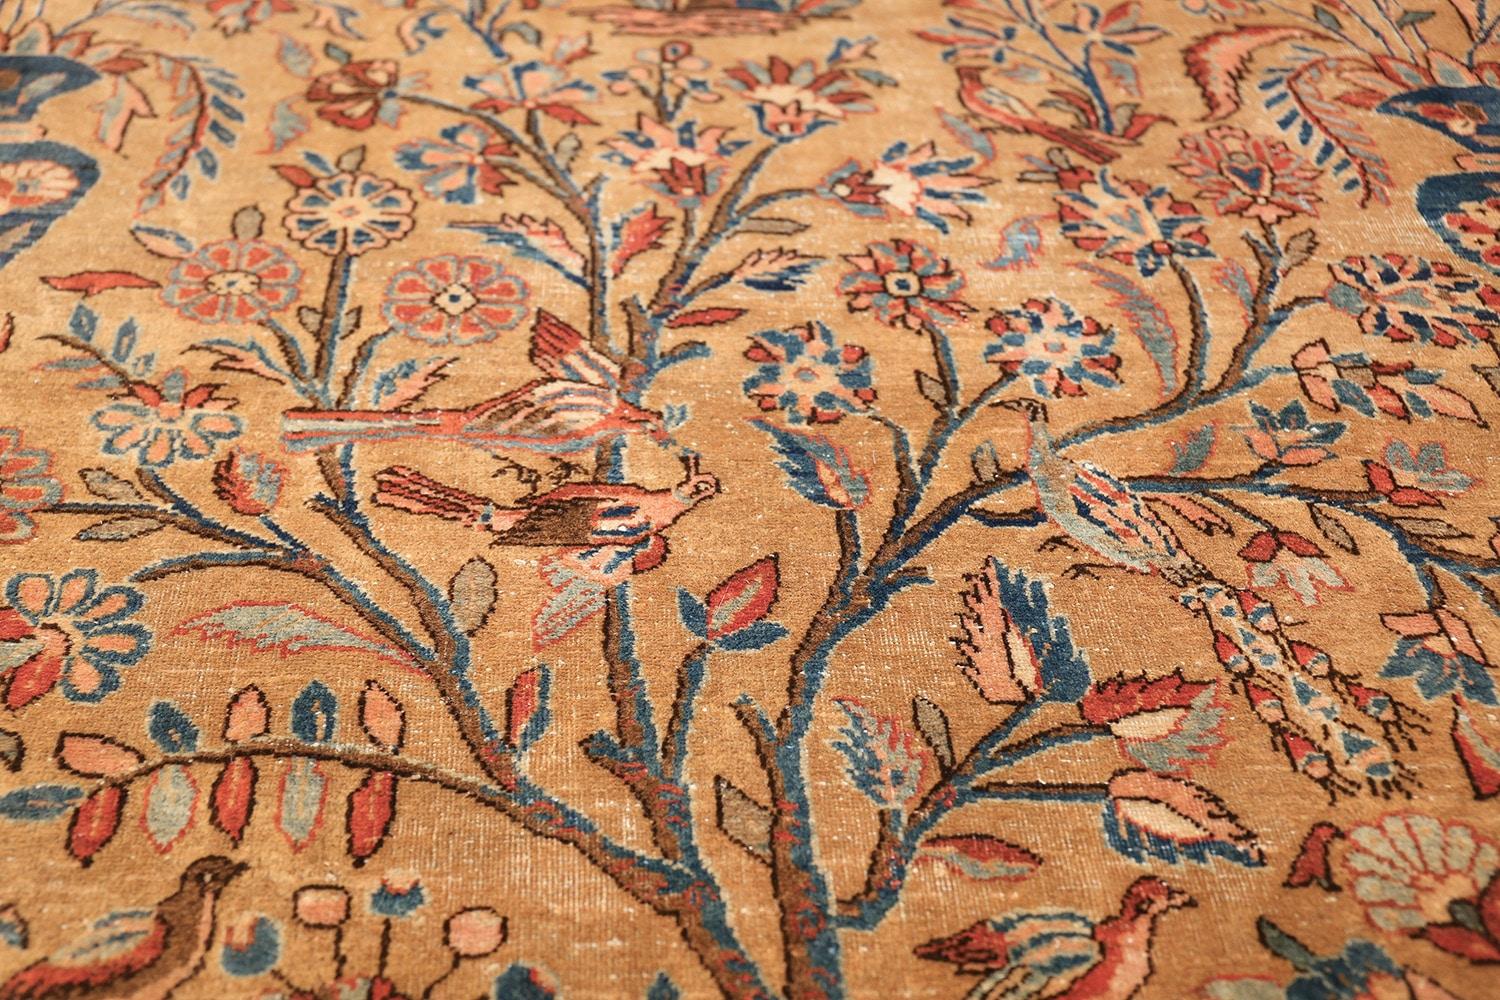 Tree of Life Design Antique Persian Kashan Rug. 13' 8